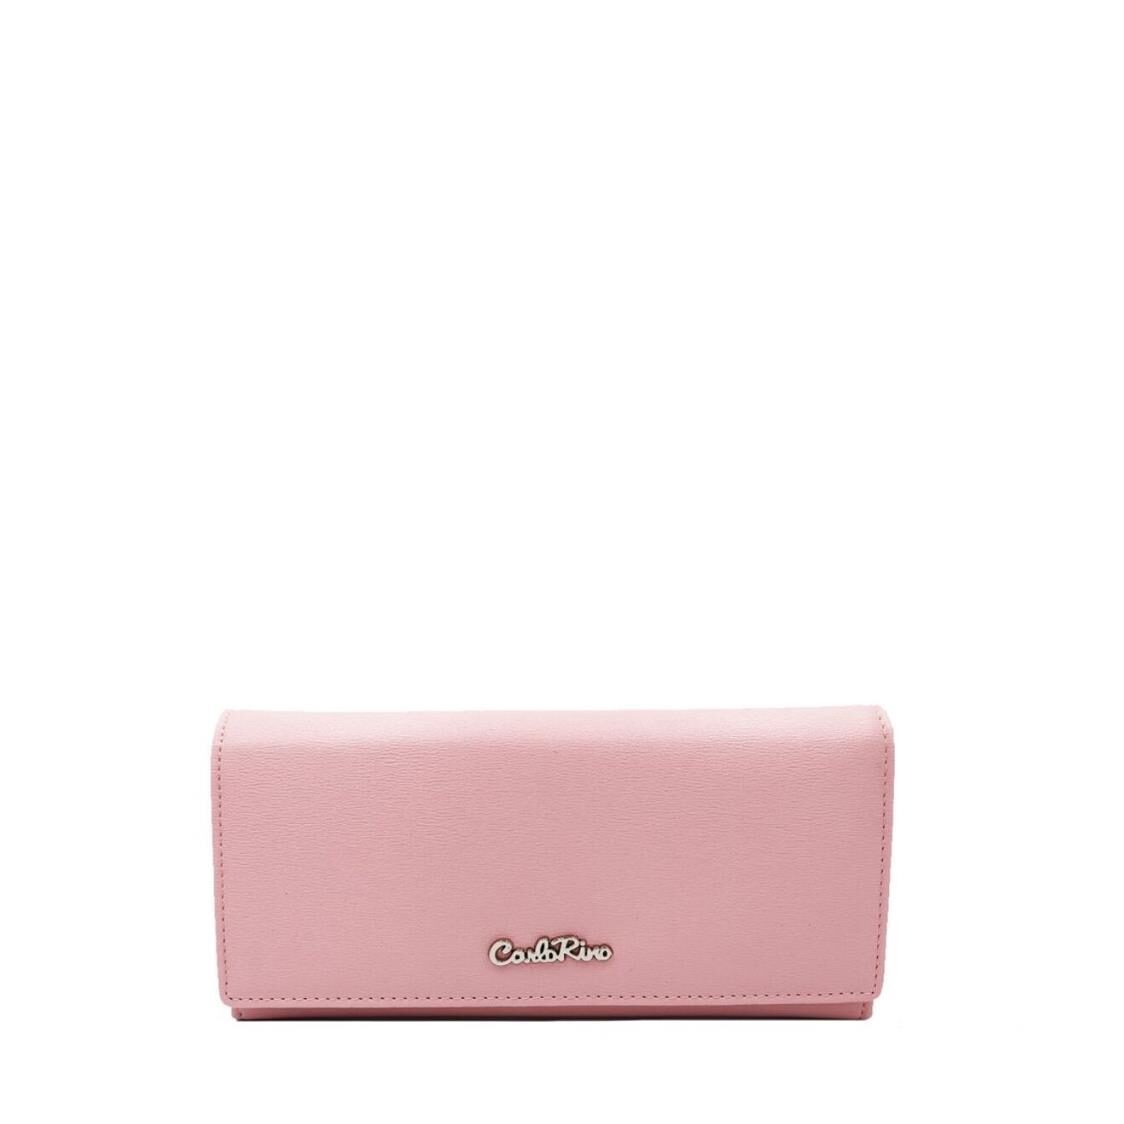 Carlo Rino 2 Fold Long Wallet Pink 34997-503-24